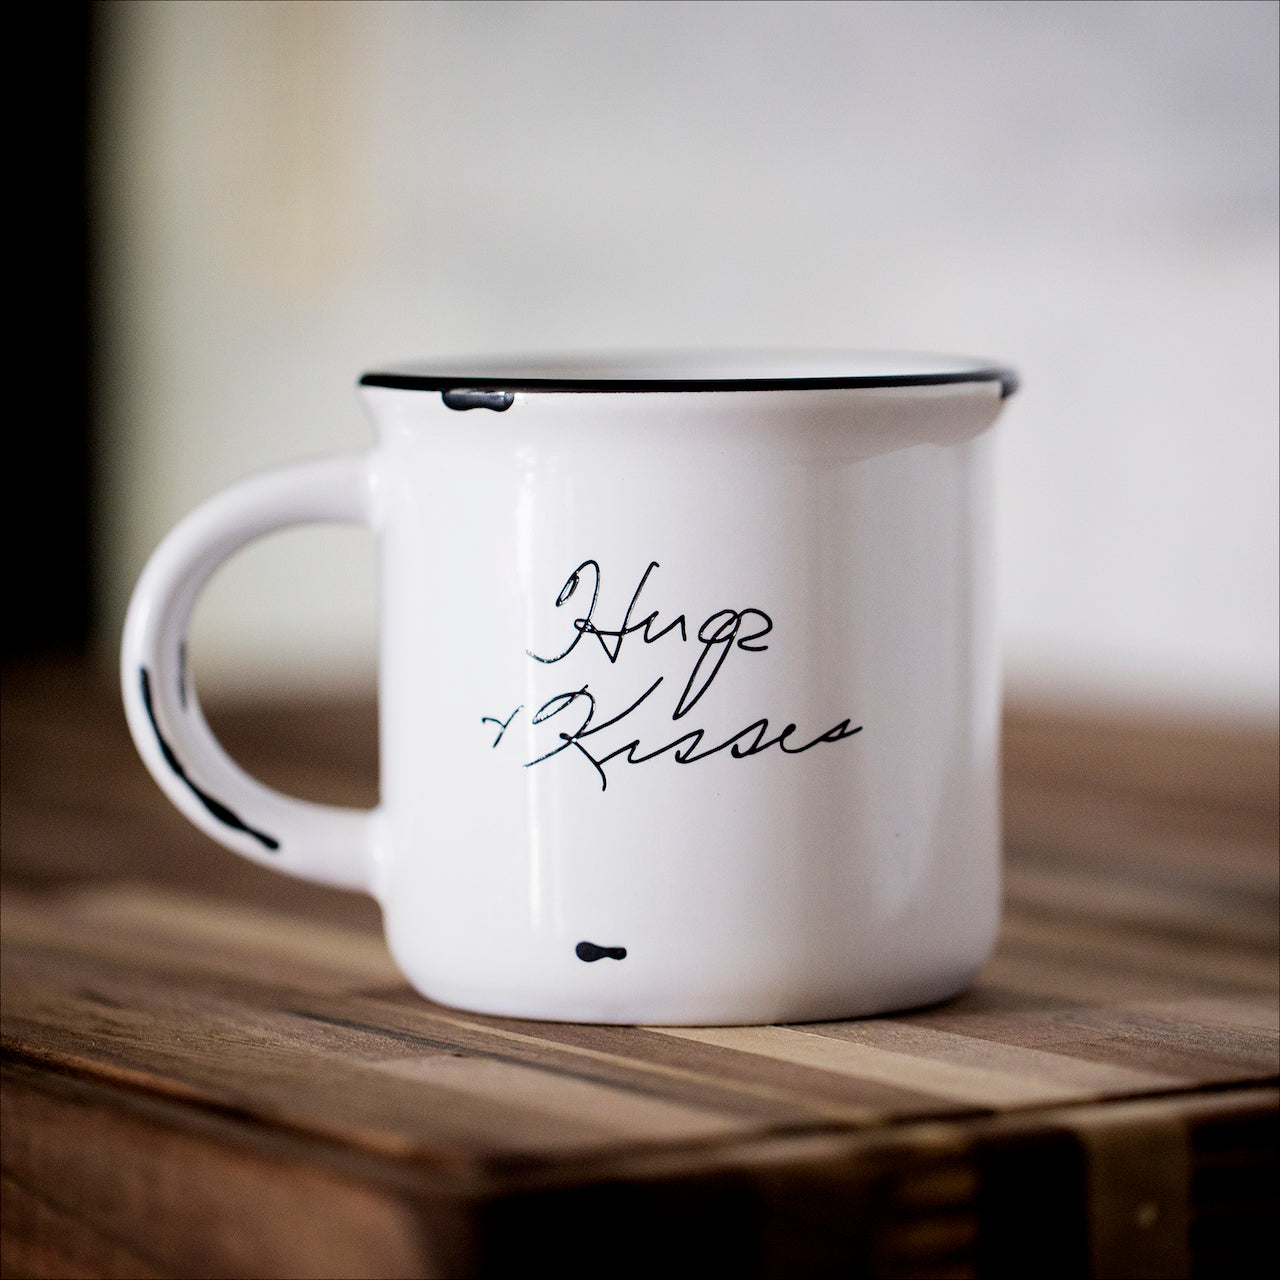 Drinkware (Ceramic) - Vintage Inspired Mug - Handwritten